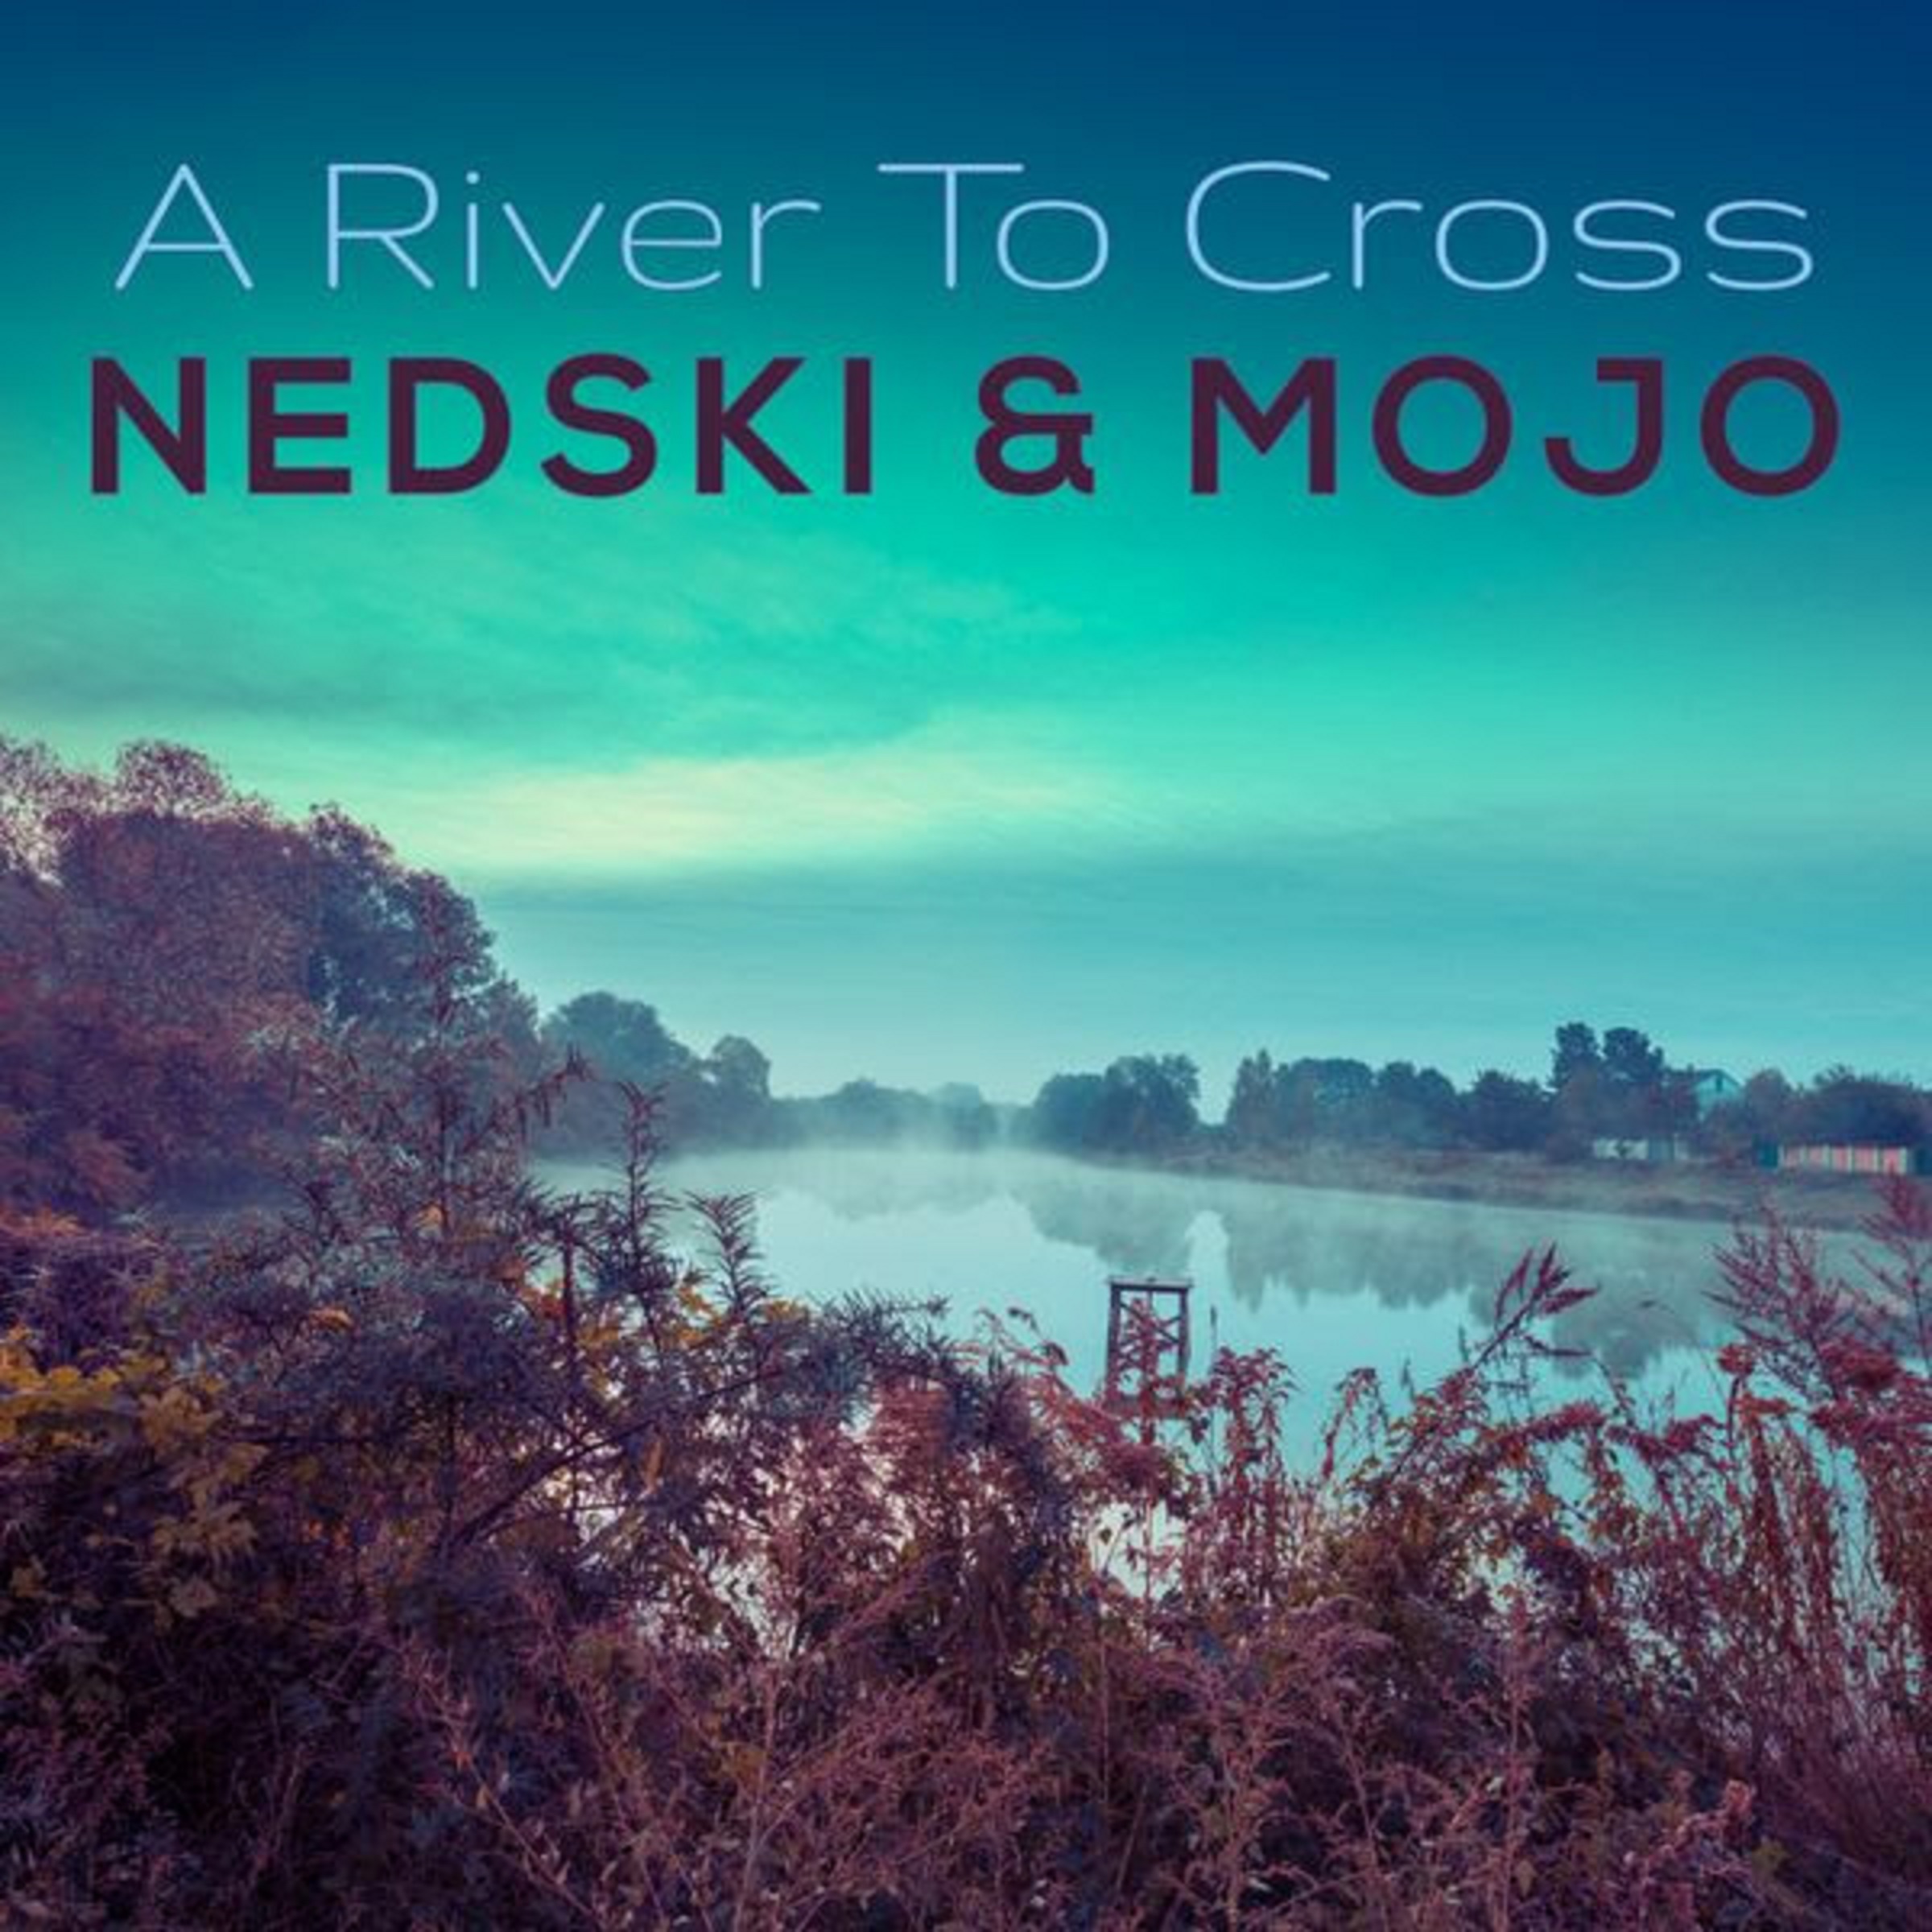 "A River To Cross" - new single from Nedski & Mojo